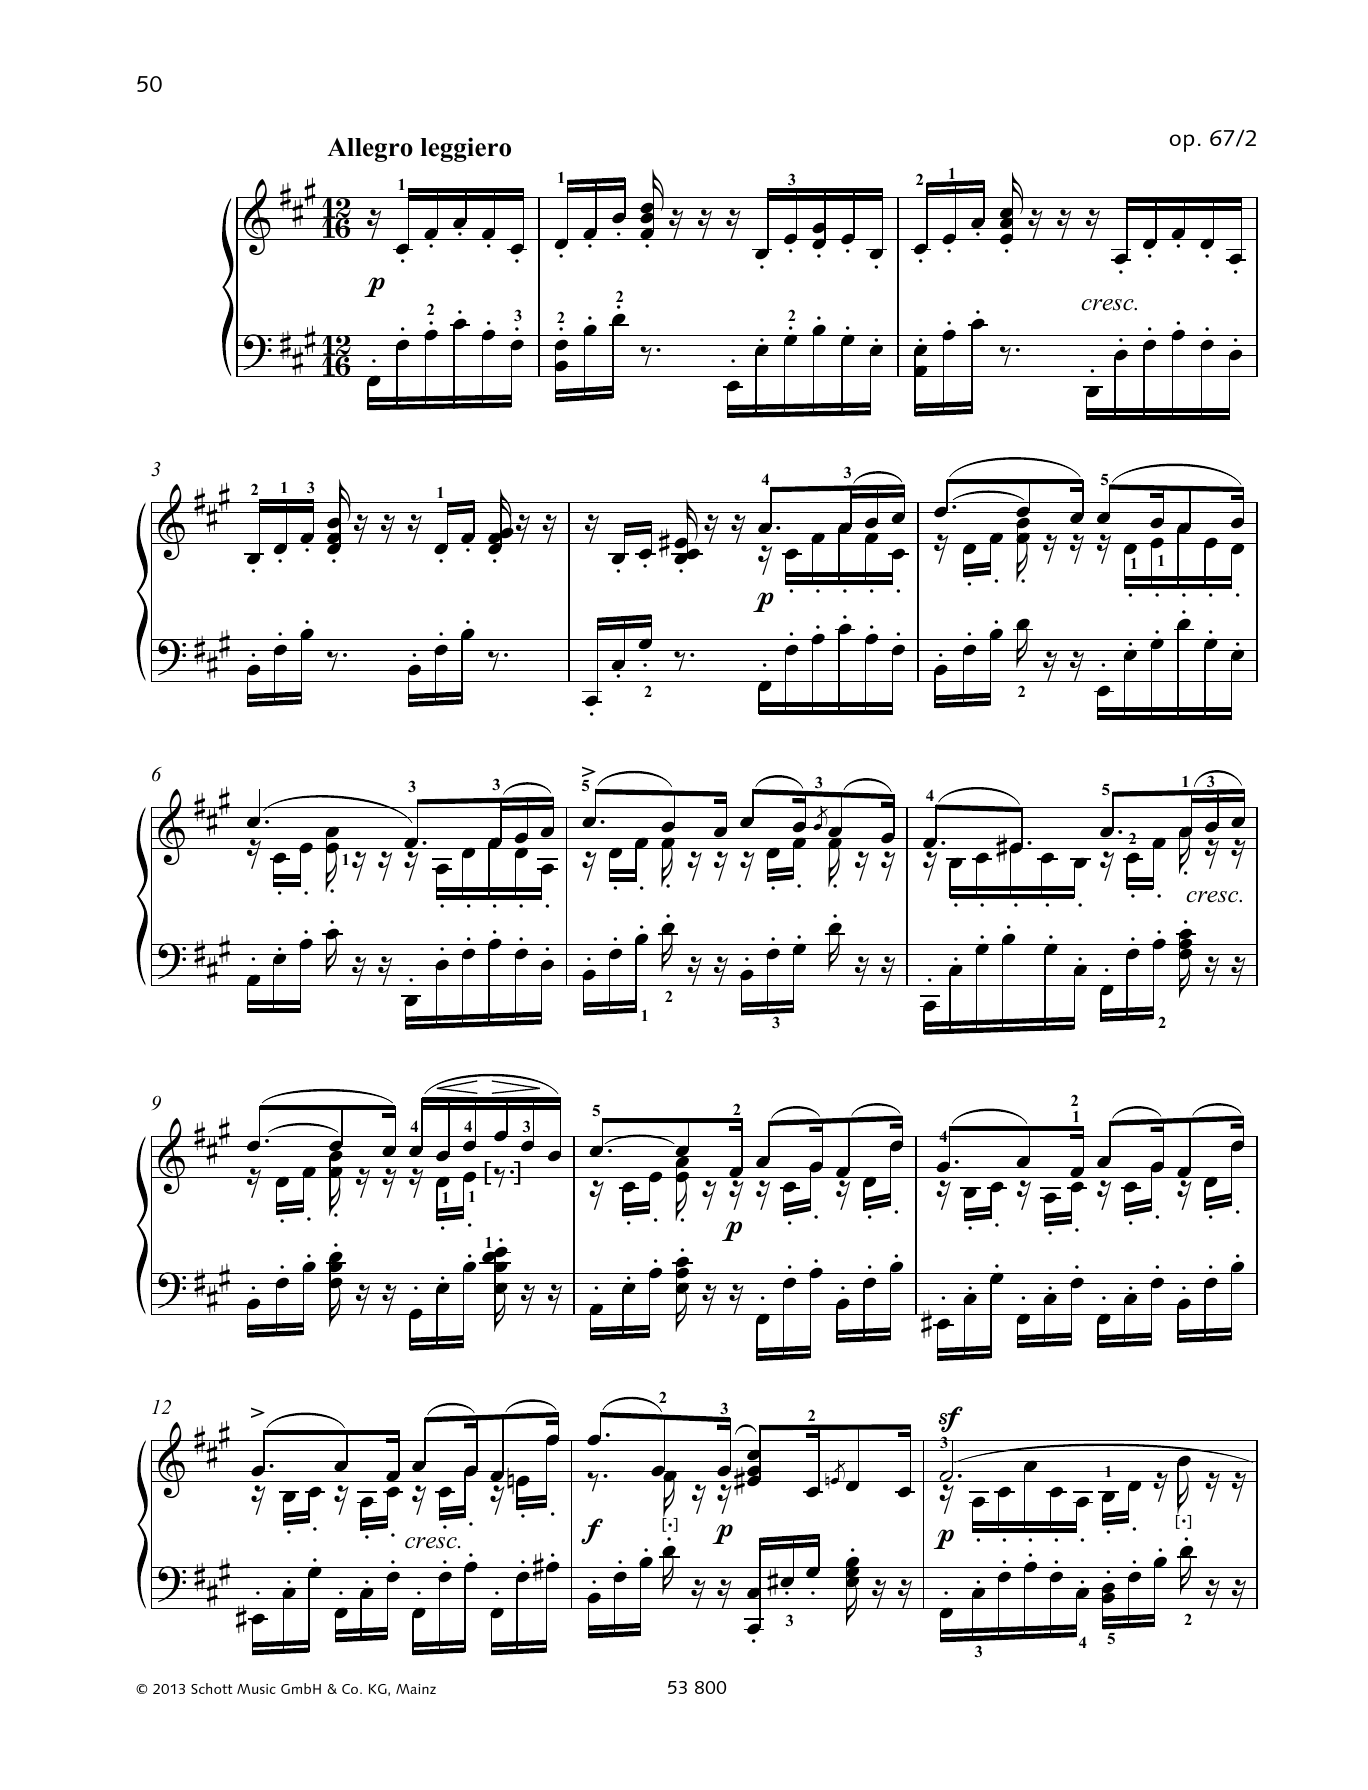 Felix Mendelssohn Bartholdy Allegro leggiero Sheet Music Notes & Chords for Piano Solo - Download or Print PDF